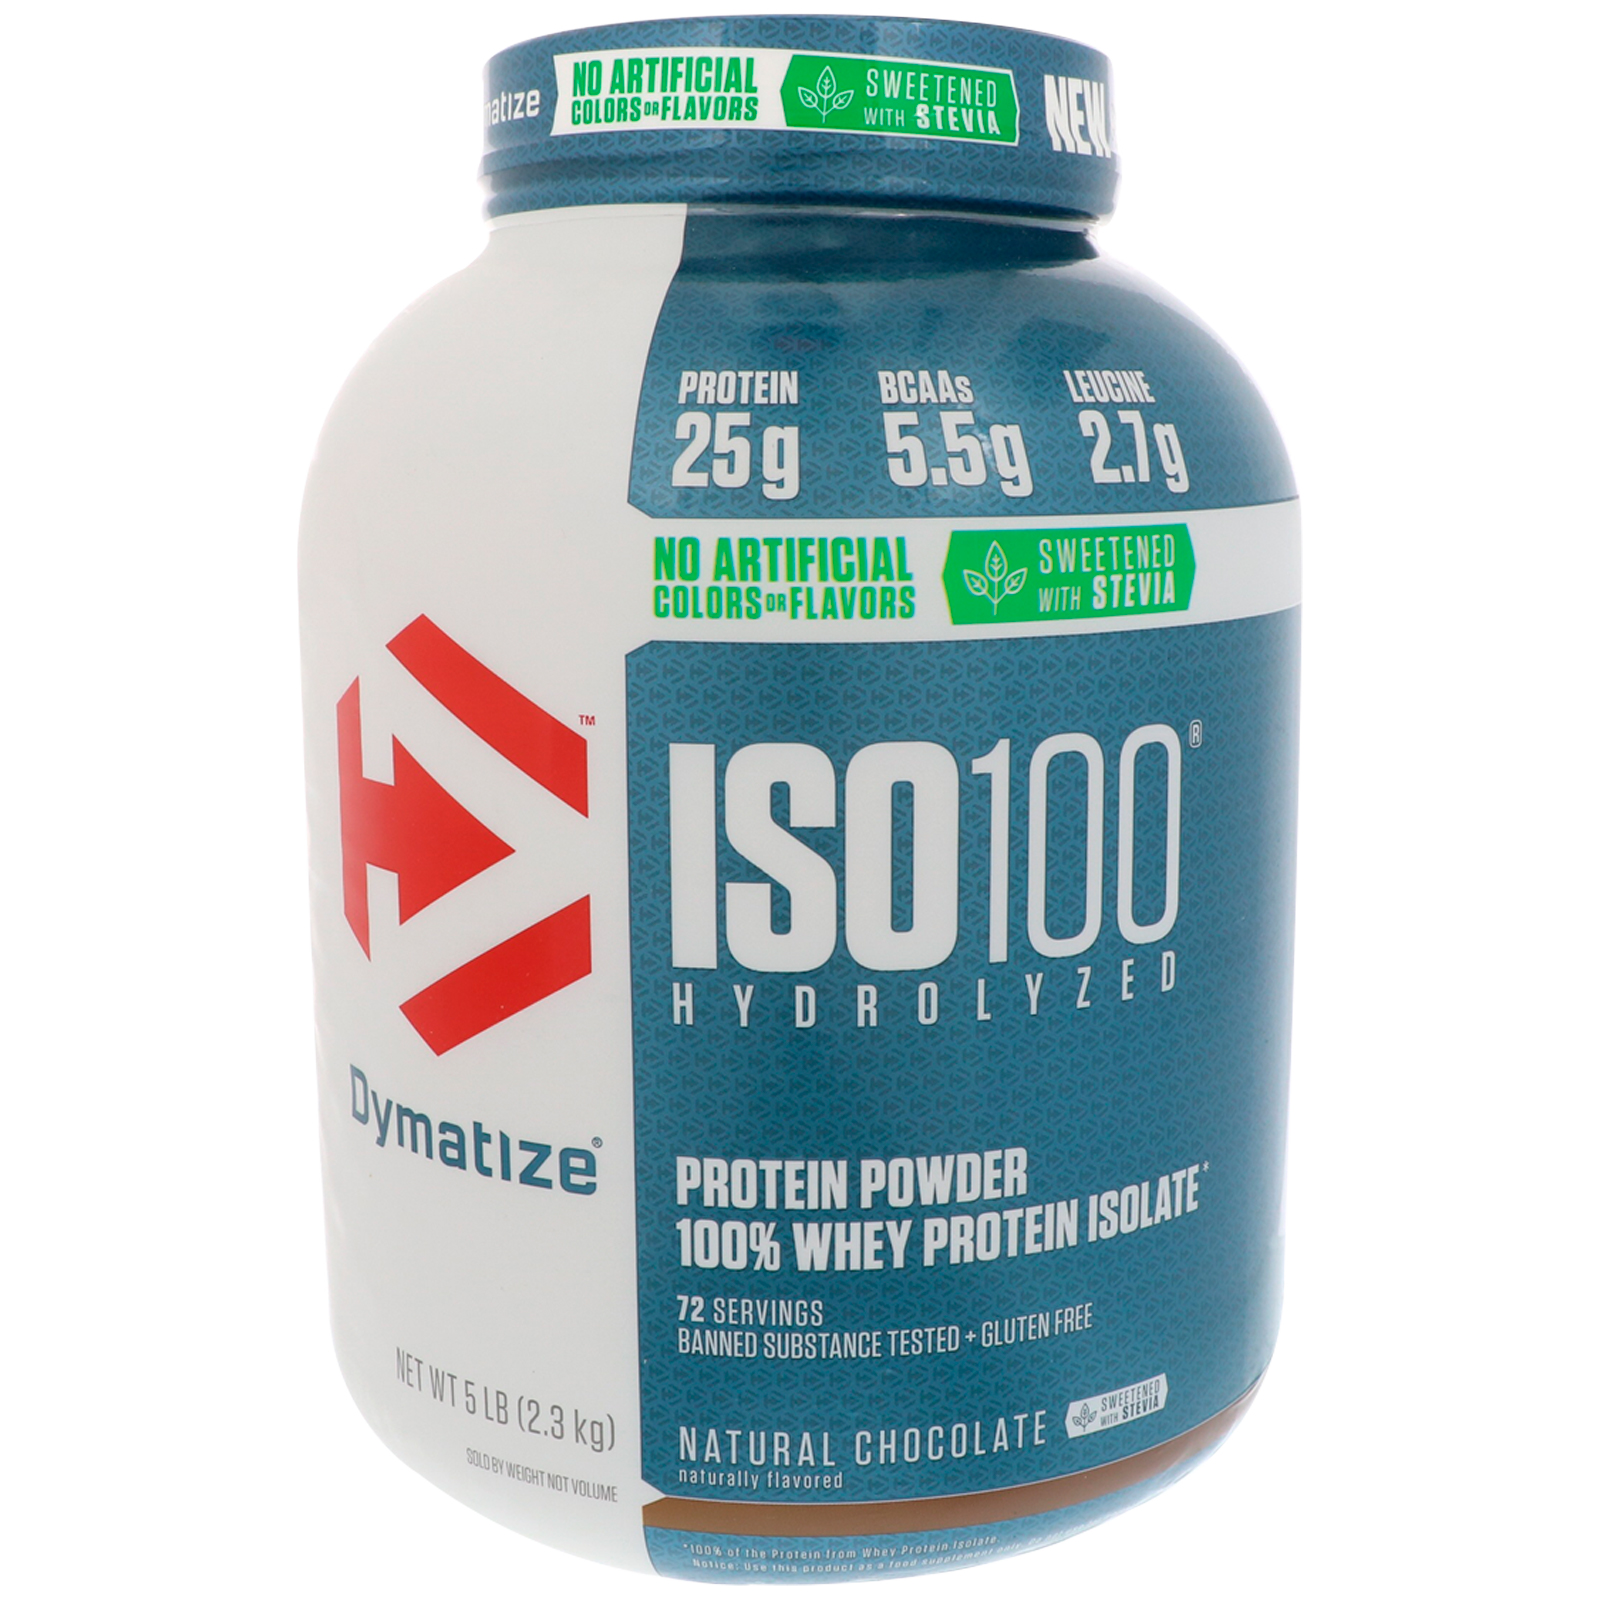 Натуральный протеин. Протеин Dymatize ISO-100. Dymatize ISO 100 hydrolyzed. ISO 100 изолят. Диматайз протеин изолят.